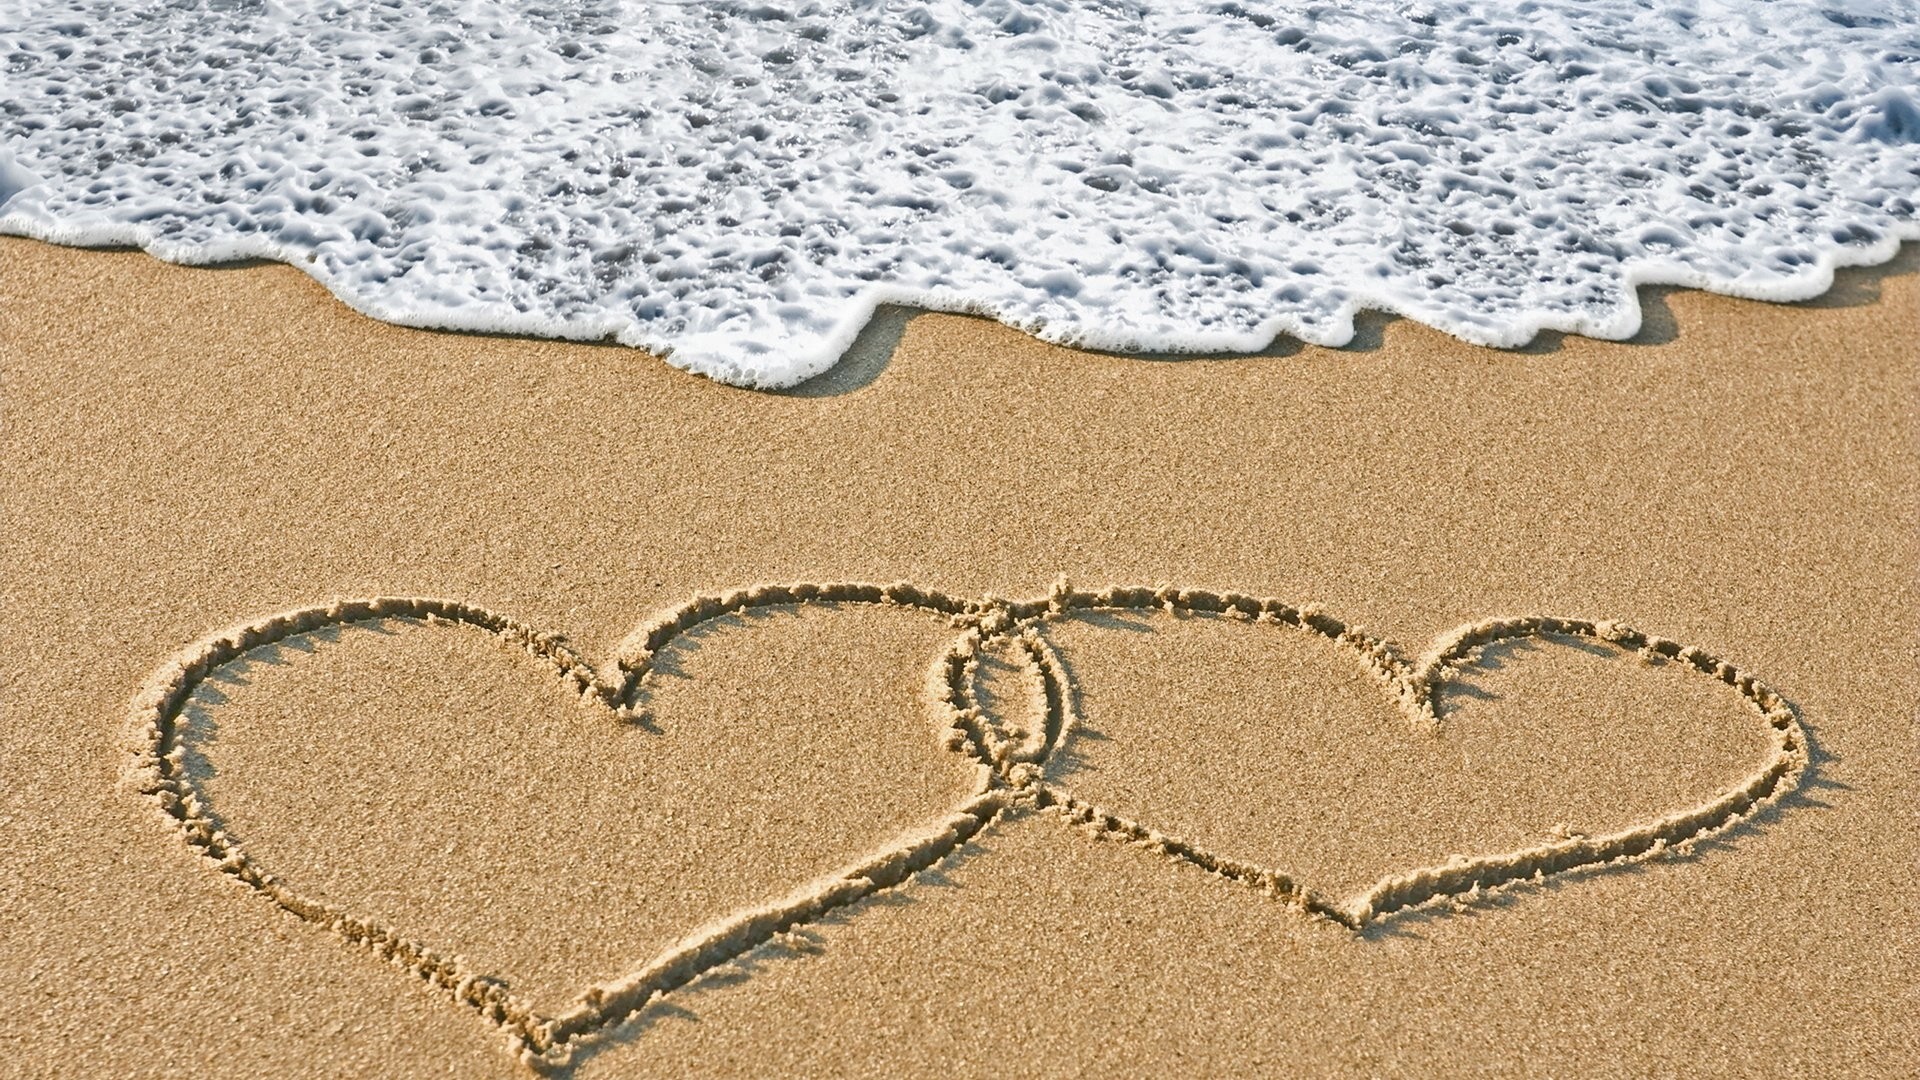 Sand Love wallpaper photo hd